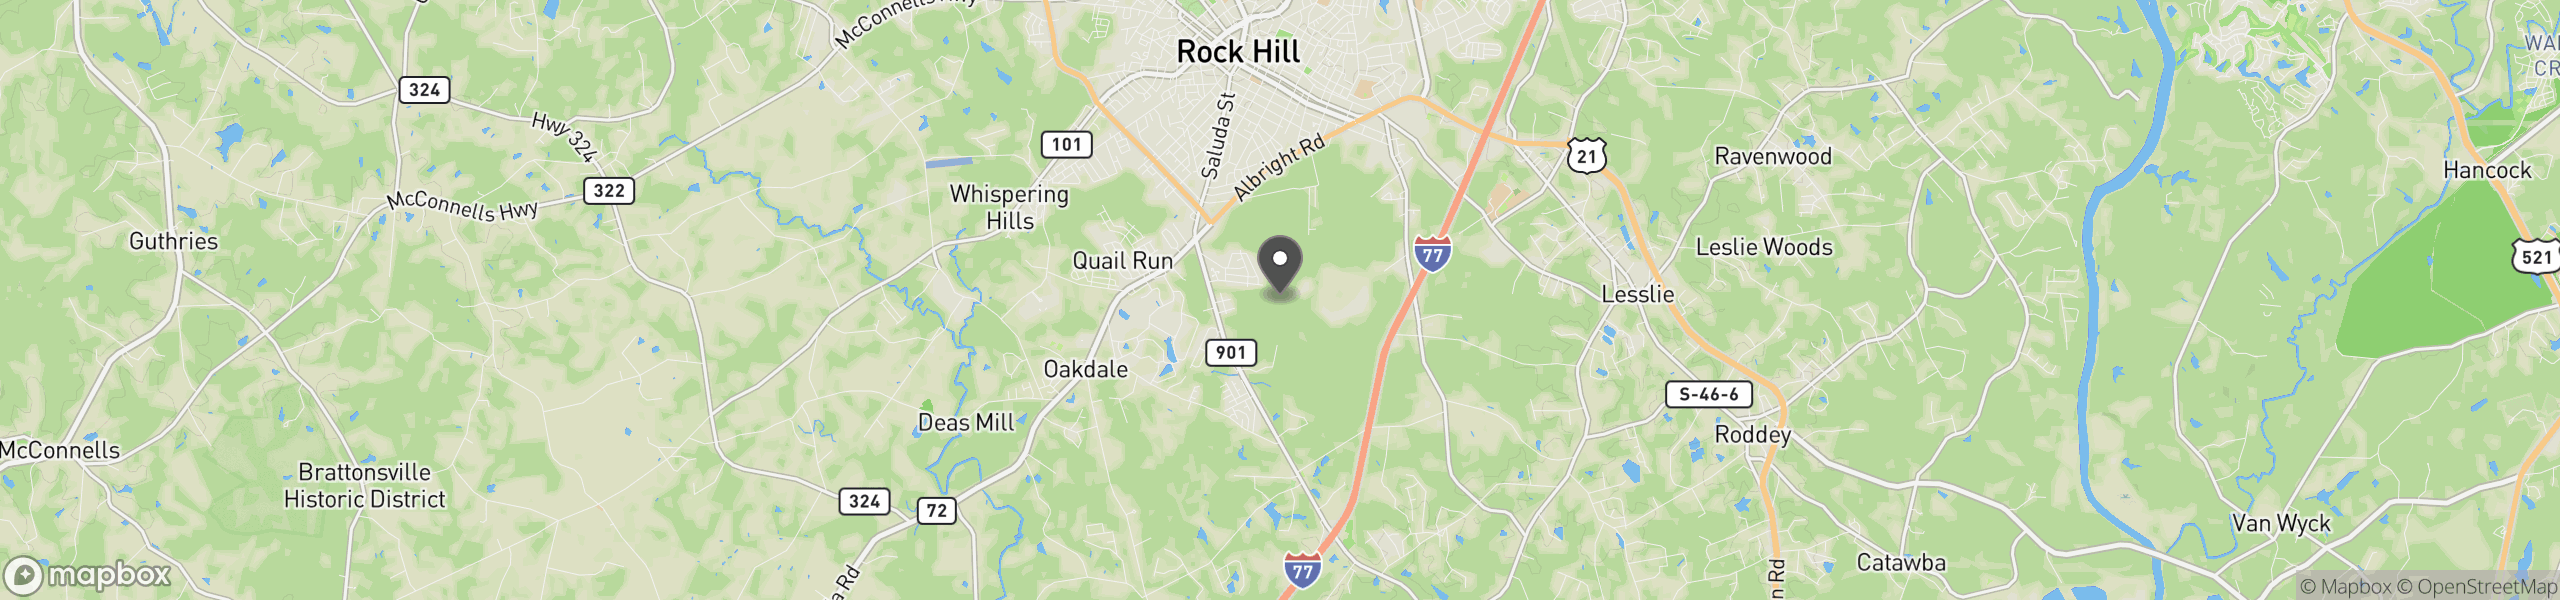 Rock Hill, SC 29730